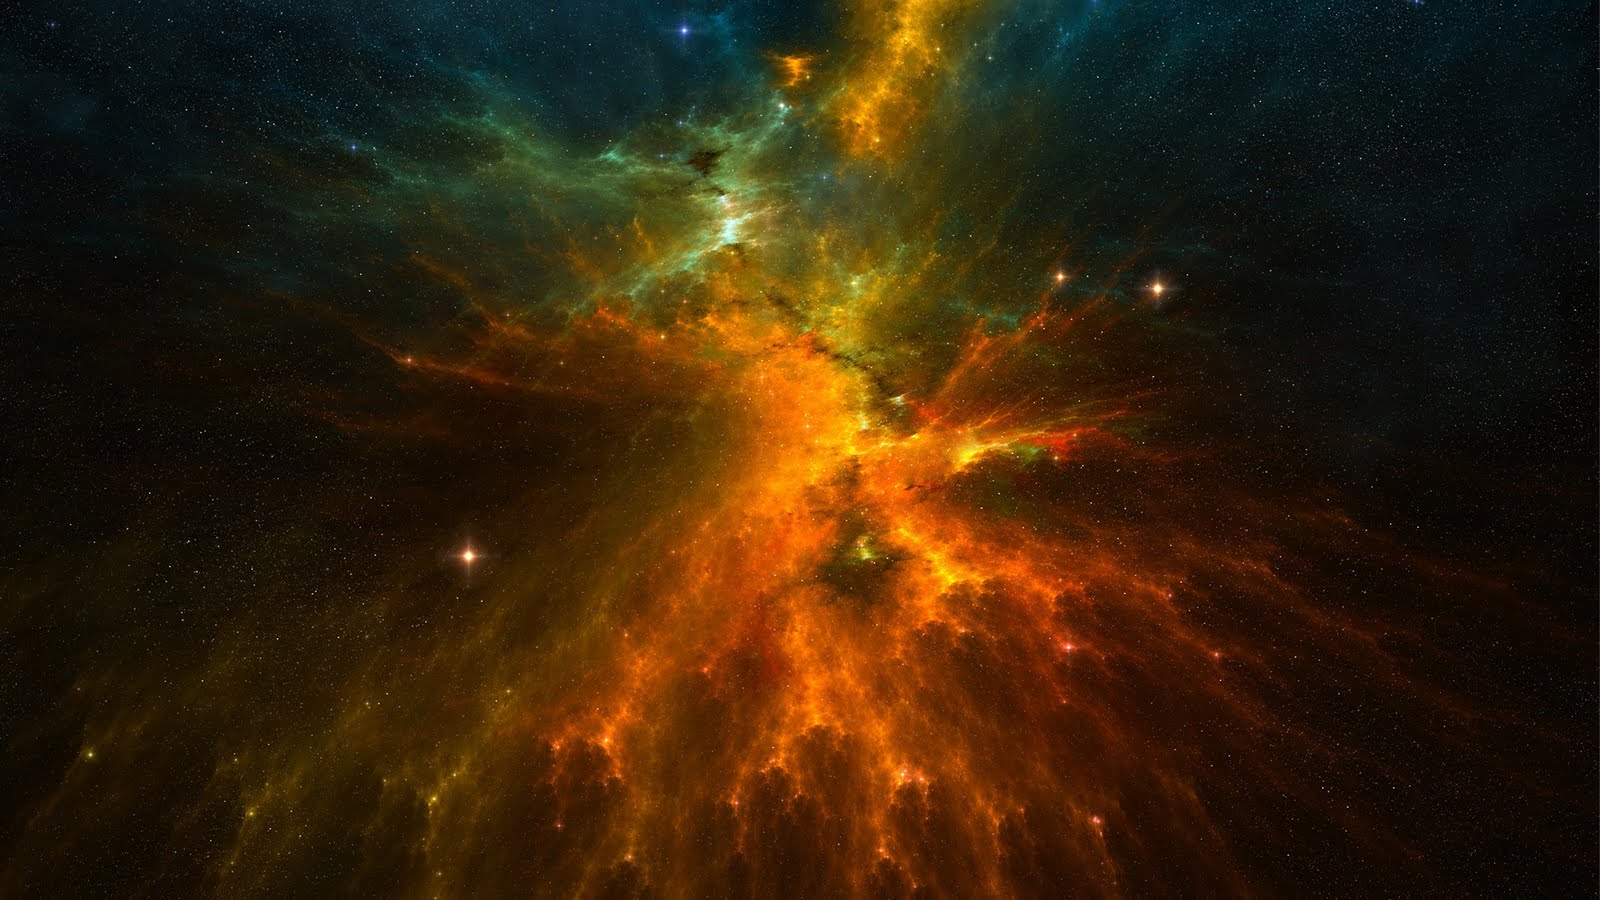 https://blogger.googleusercontent.com/img/b/R29vZ2xl/AVvXsEiJRdUz83USodG0rJ4tv0nuhNjvjzDsGxvd4o2UPECOJODEd9fOiZfmlQOwDUnE8O0n6IbAjplRWEhUmPvoKB19KwKAB37pGTWsDNnTpOMS1Ha1Cr28LkrEpcIA7wGMmbyCB3B255frVuI/s1600/Stellar_Cascade_Nebula_1920x1080+HDTV+1080p.jpg